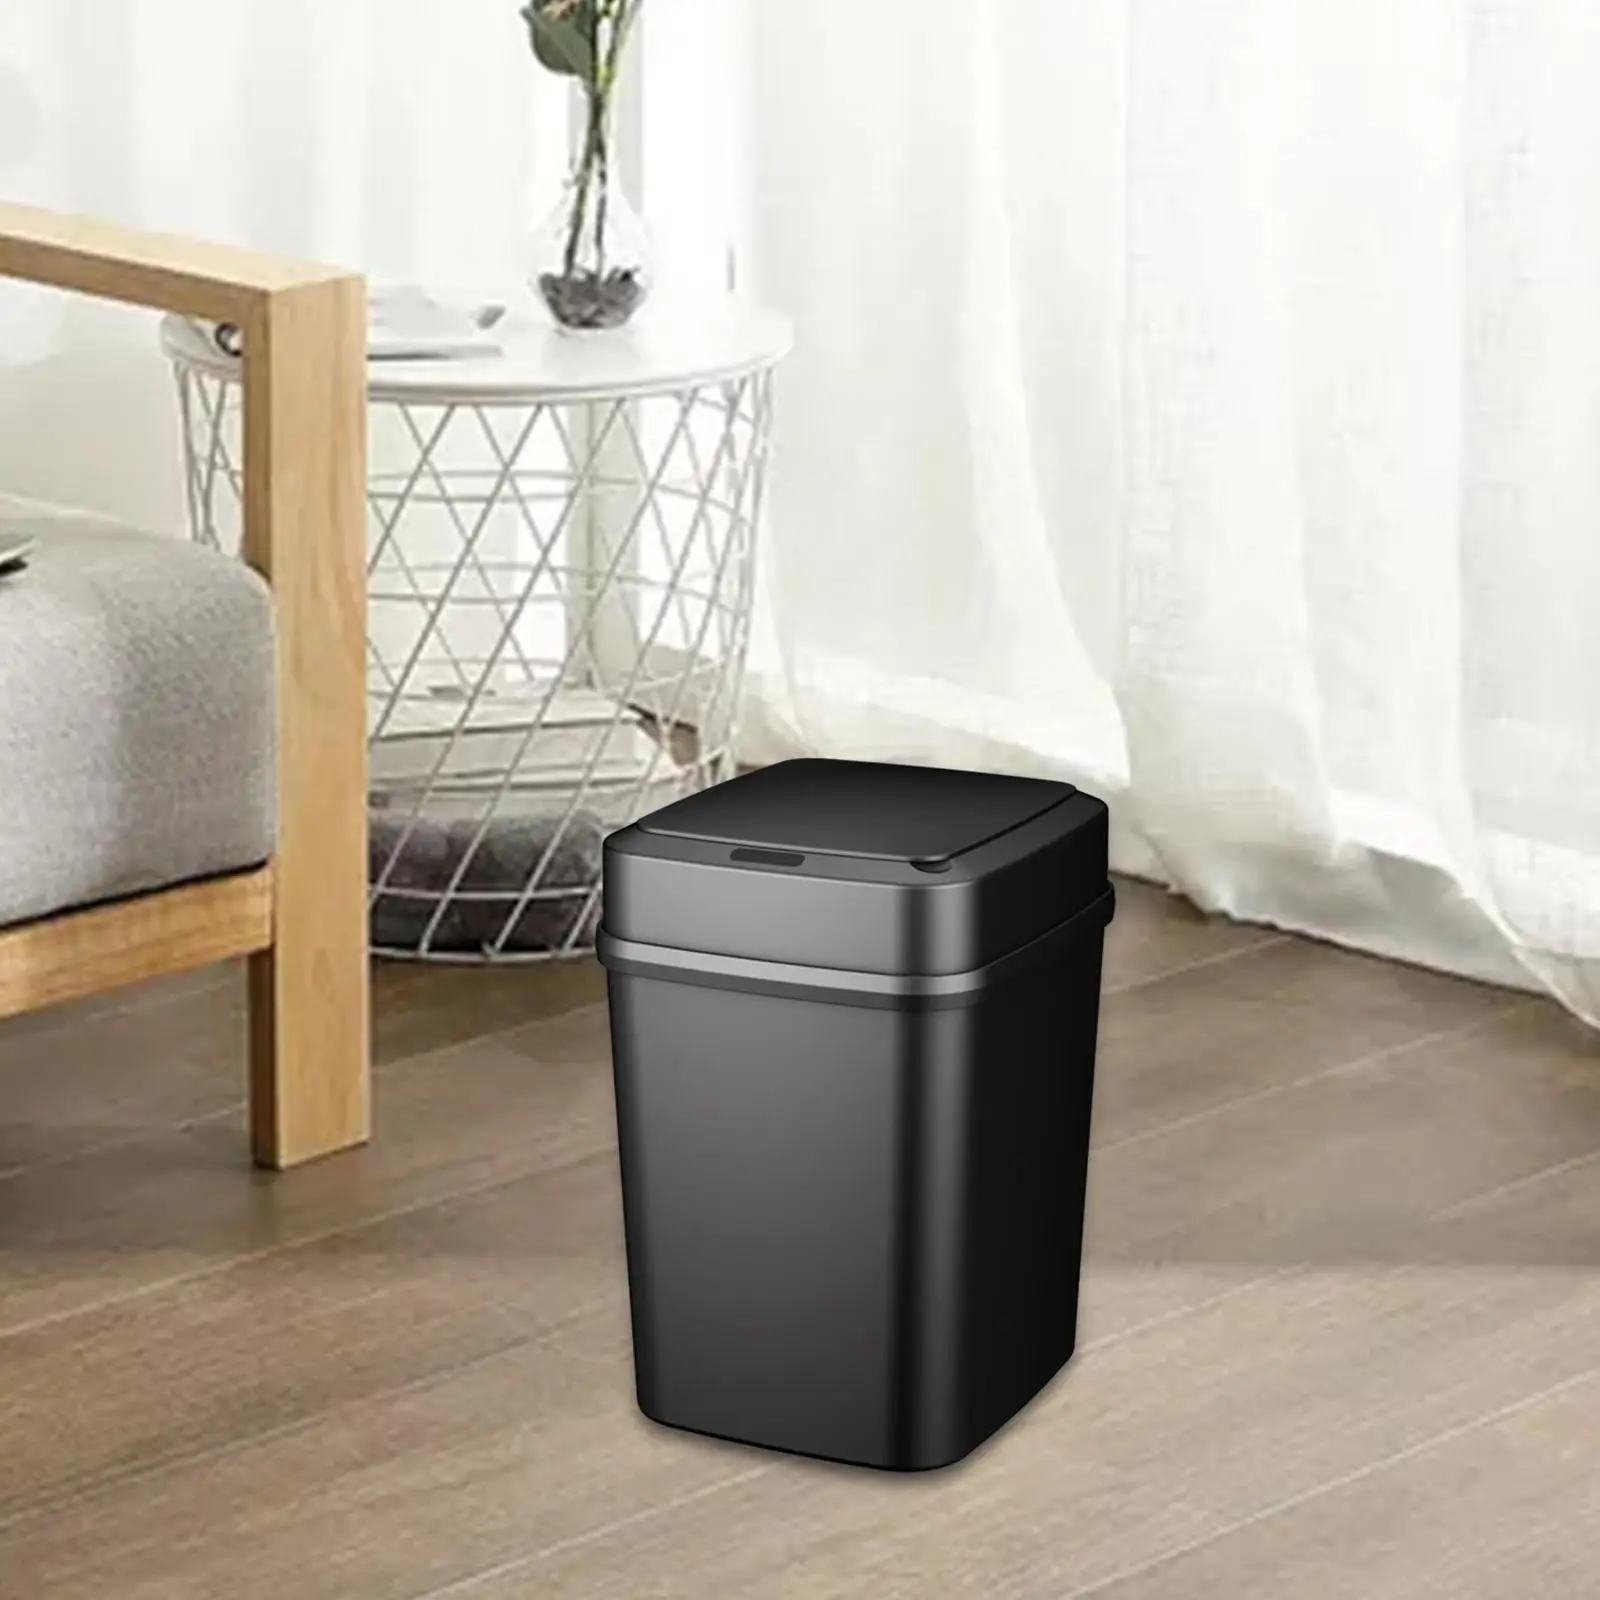 Intelligent Induction Trash Bin 13L Waterproof Bathroom Trash Cans with Lids for Outdoor Bedroom Living Room Kitchen Bathroom